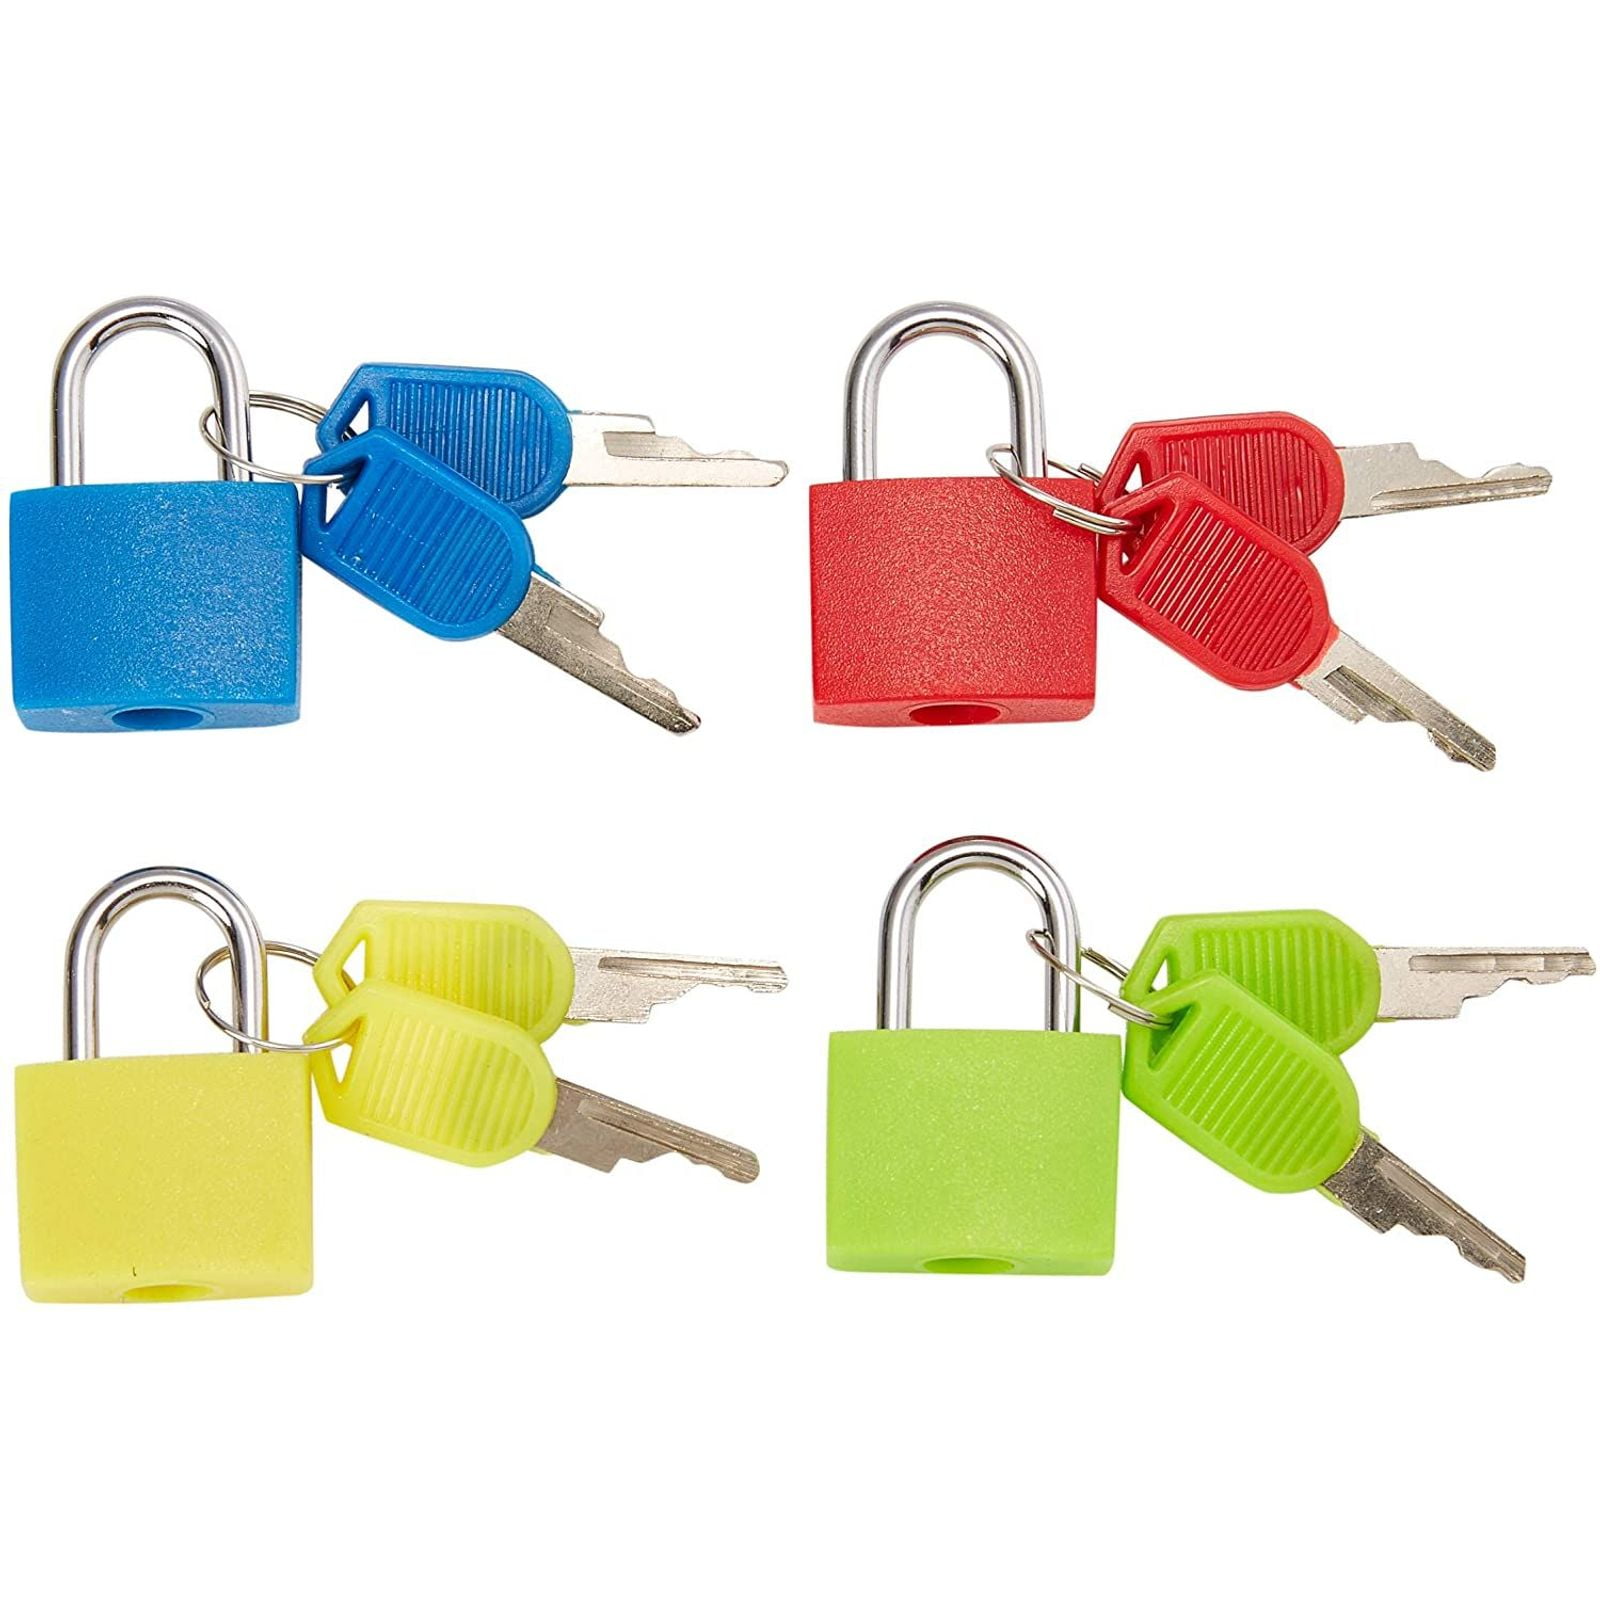 Nrevichng 6Pcs Small Locks with Keys, Multicolor Luggage Locks ABS